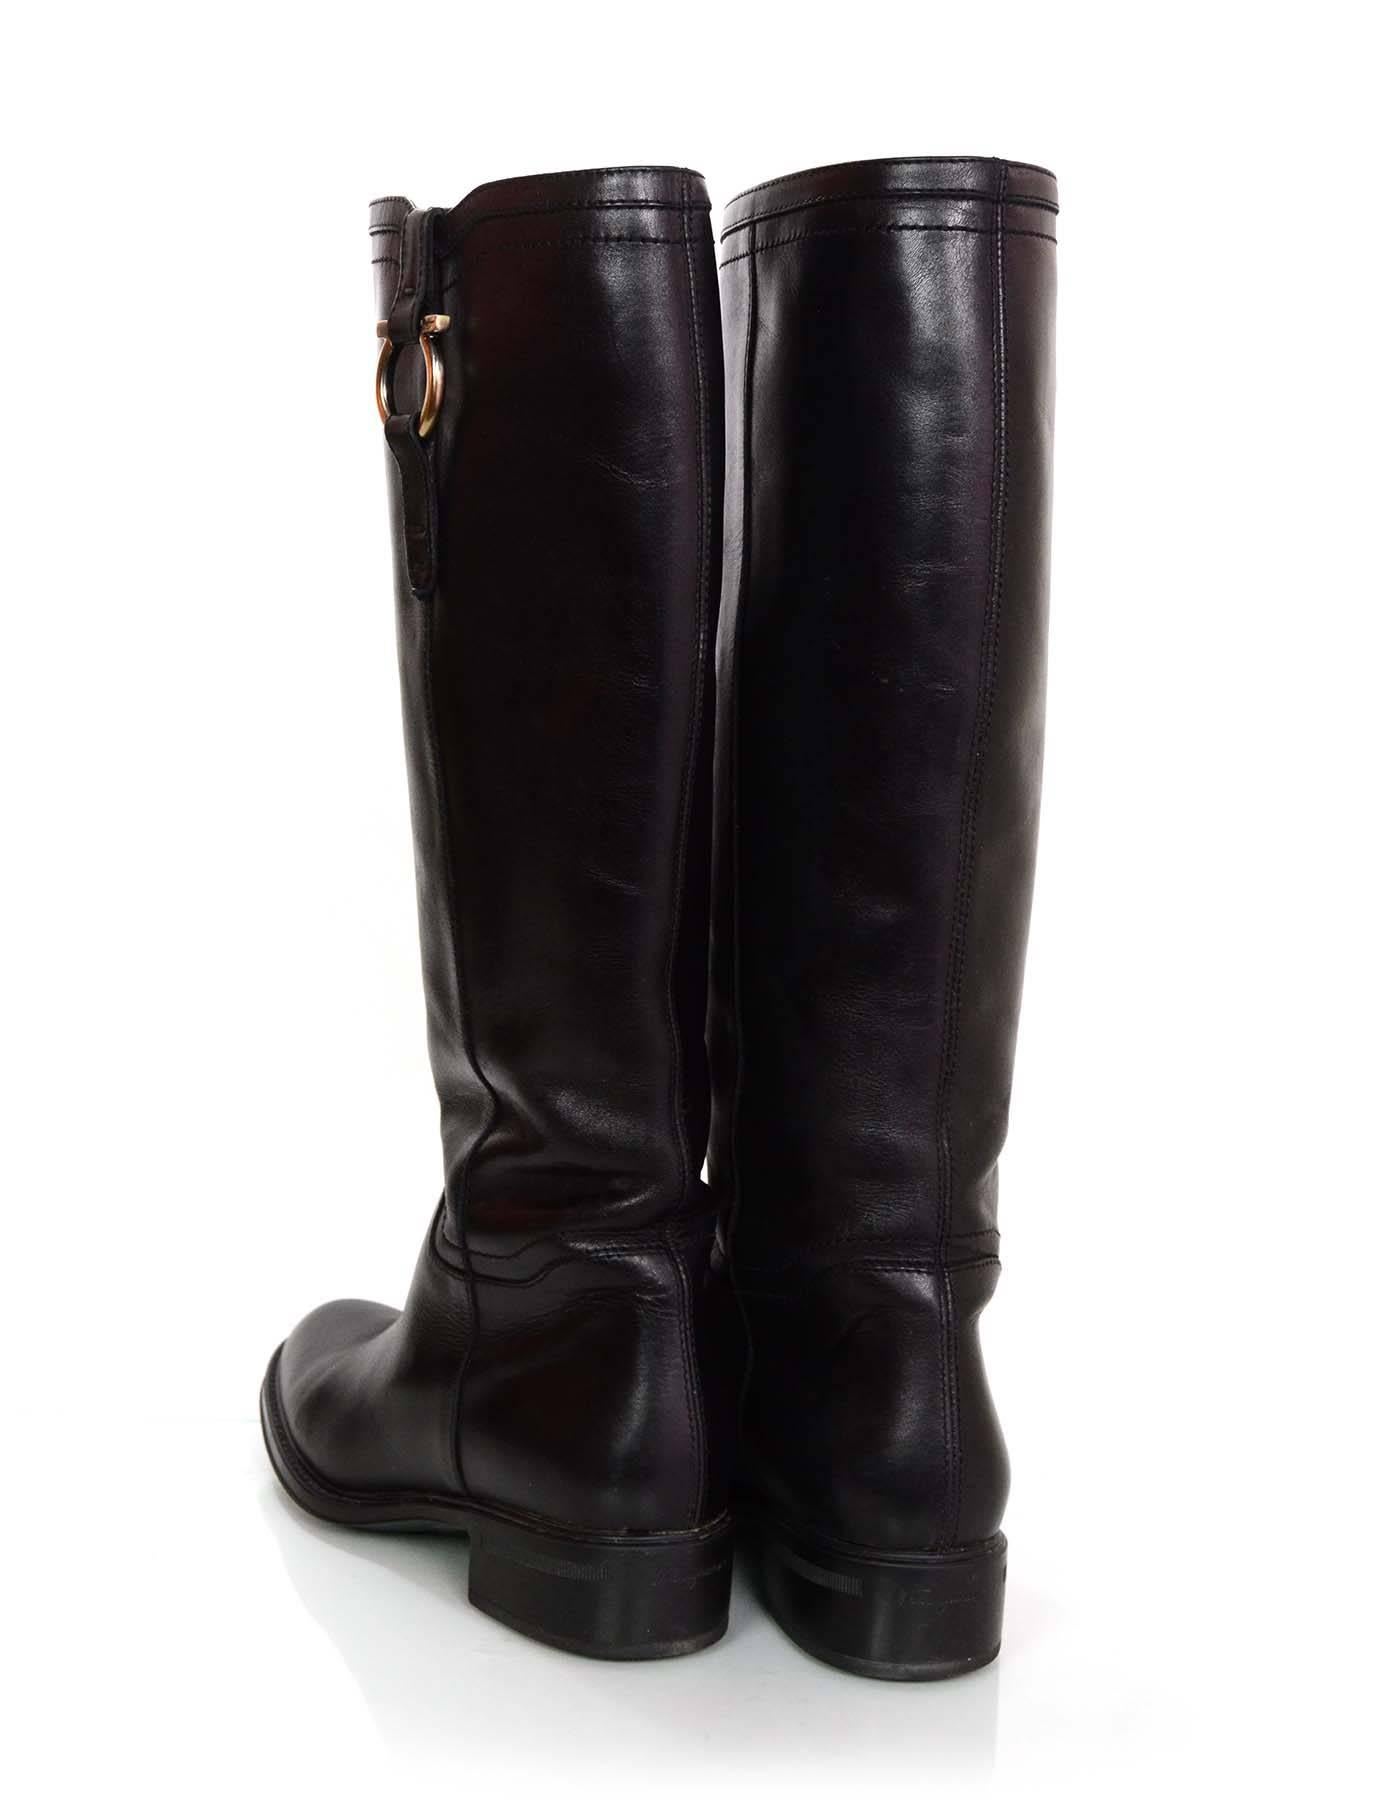 Salvatore Ferragamo Black Leather Boots Sz 5.5 1